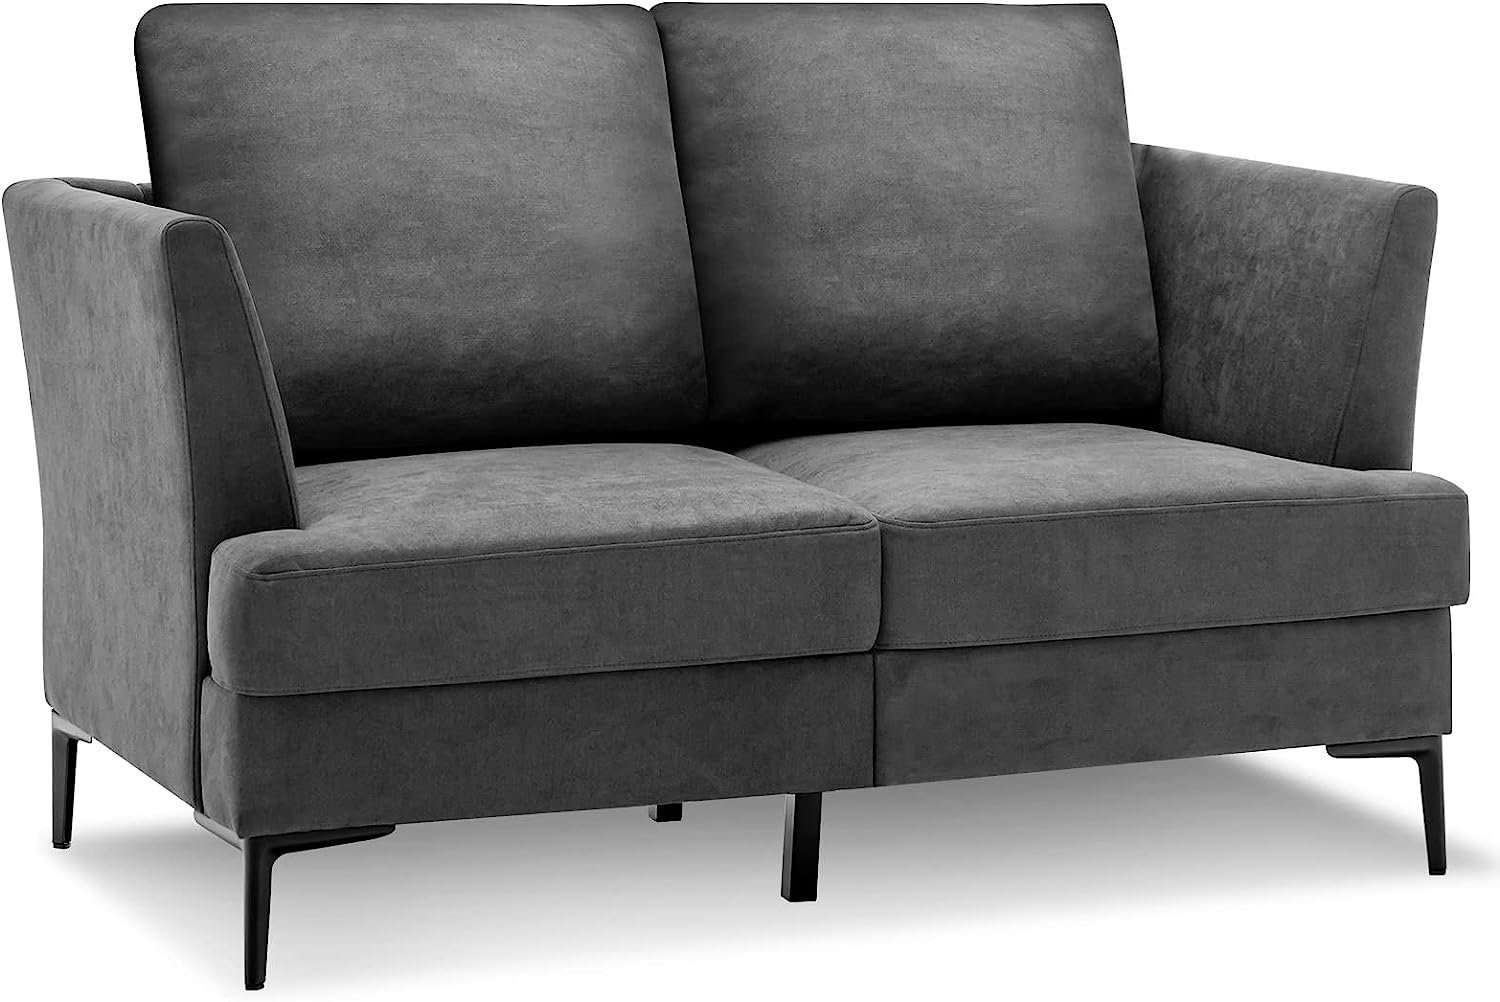 Big-Sofa KOMFOTTEU 141x80x72cm, grau Doppelsofa,